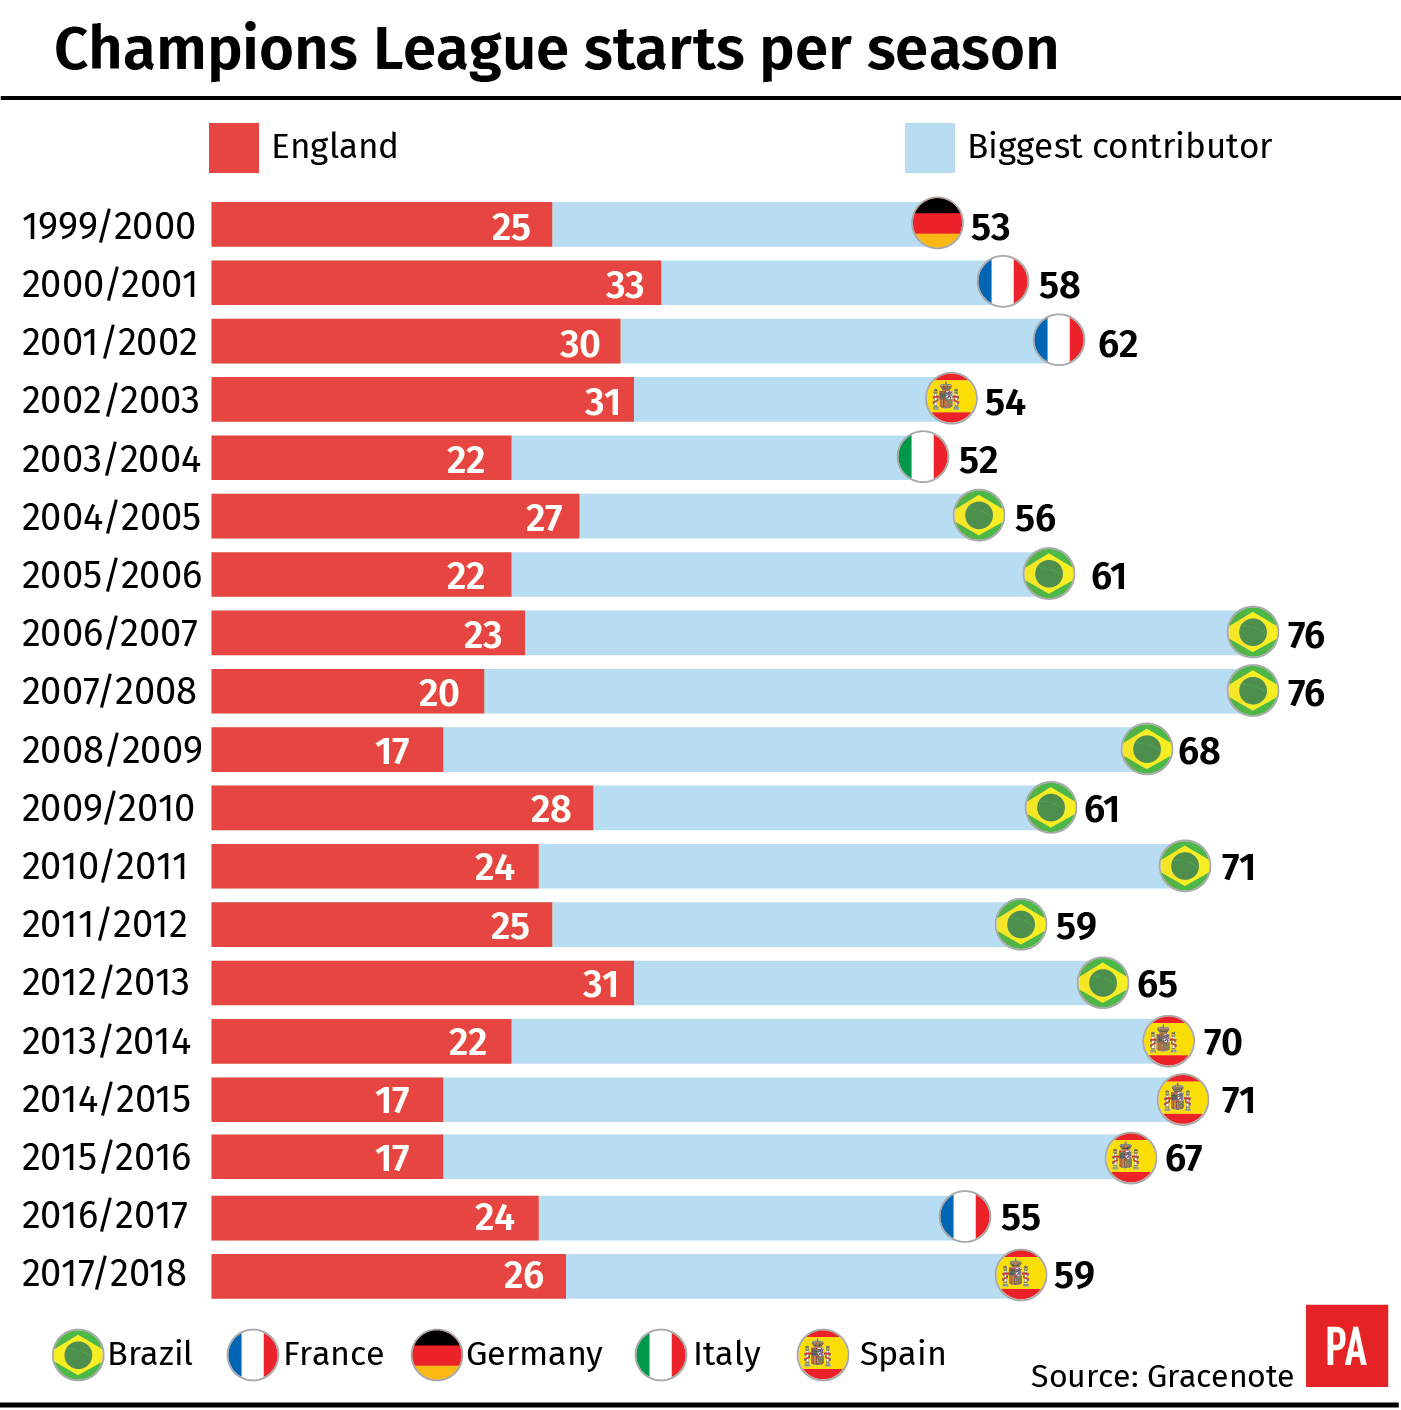 Champions League starts per season